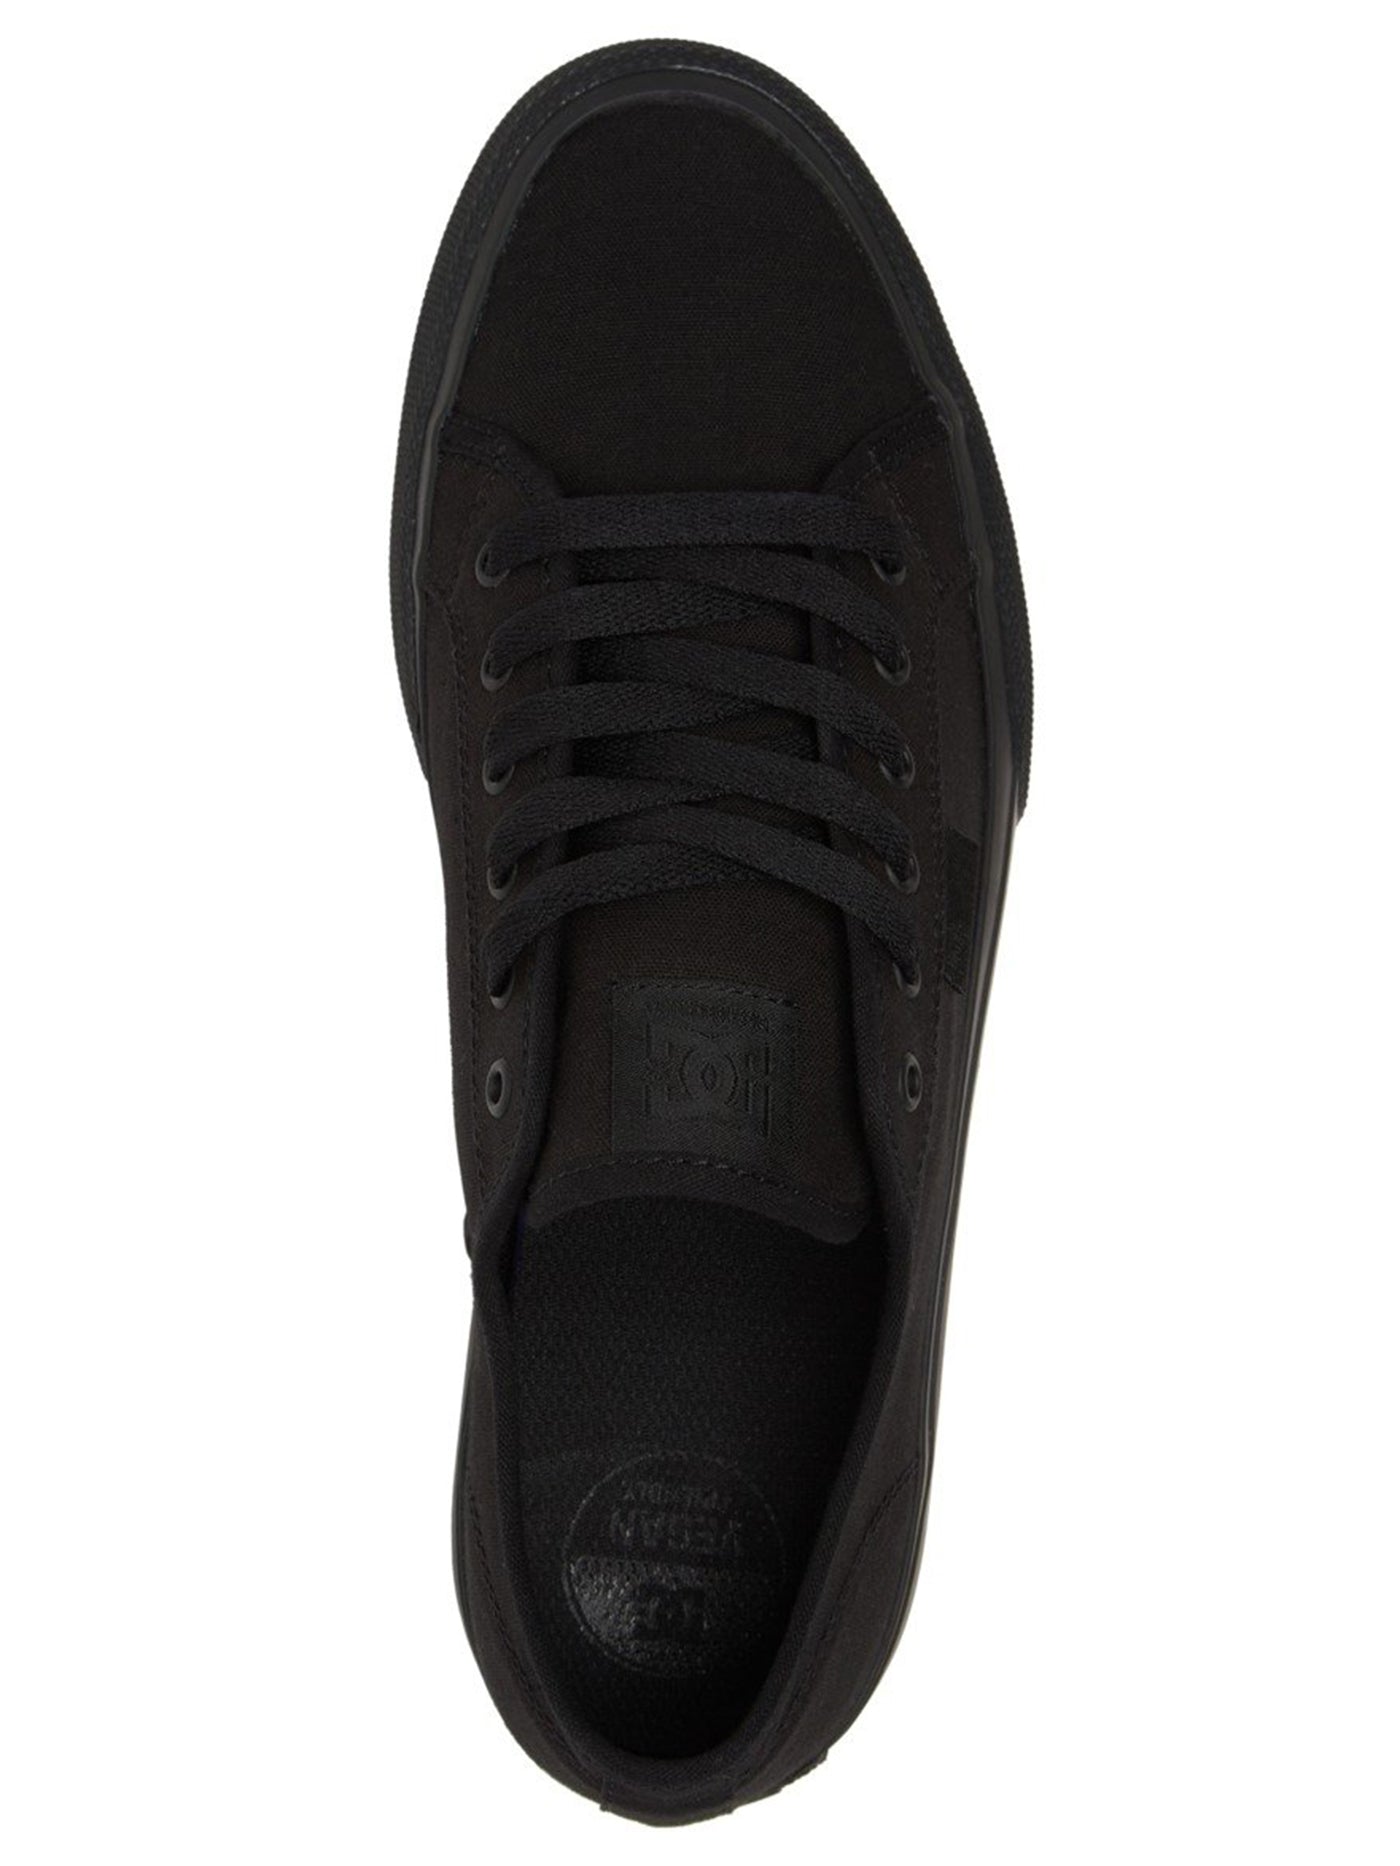 DC Manual Black Shoes